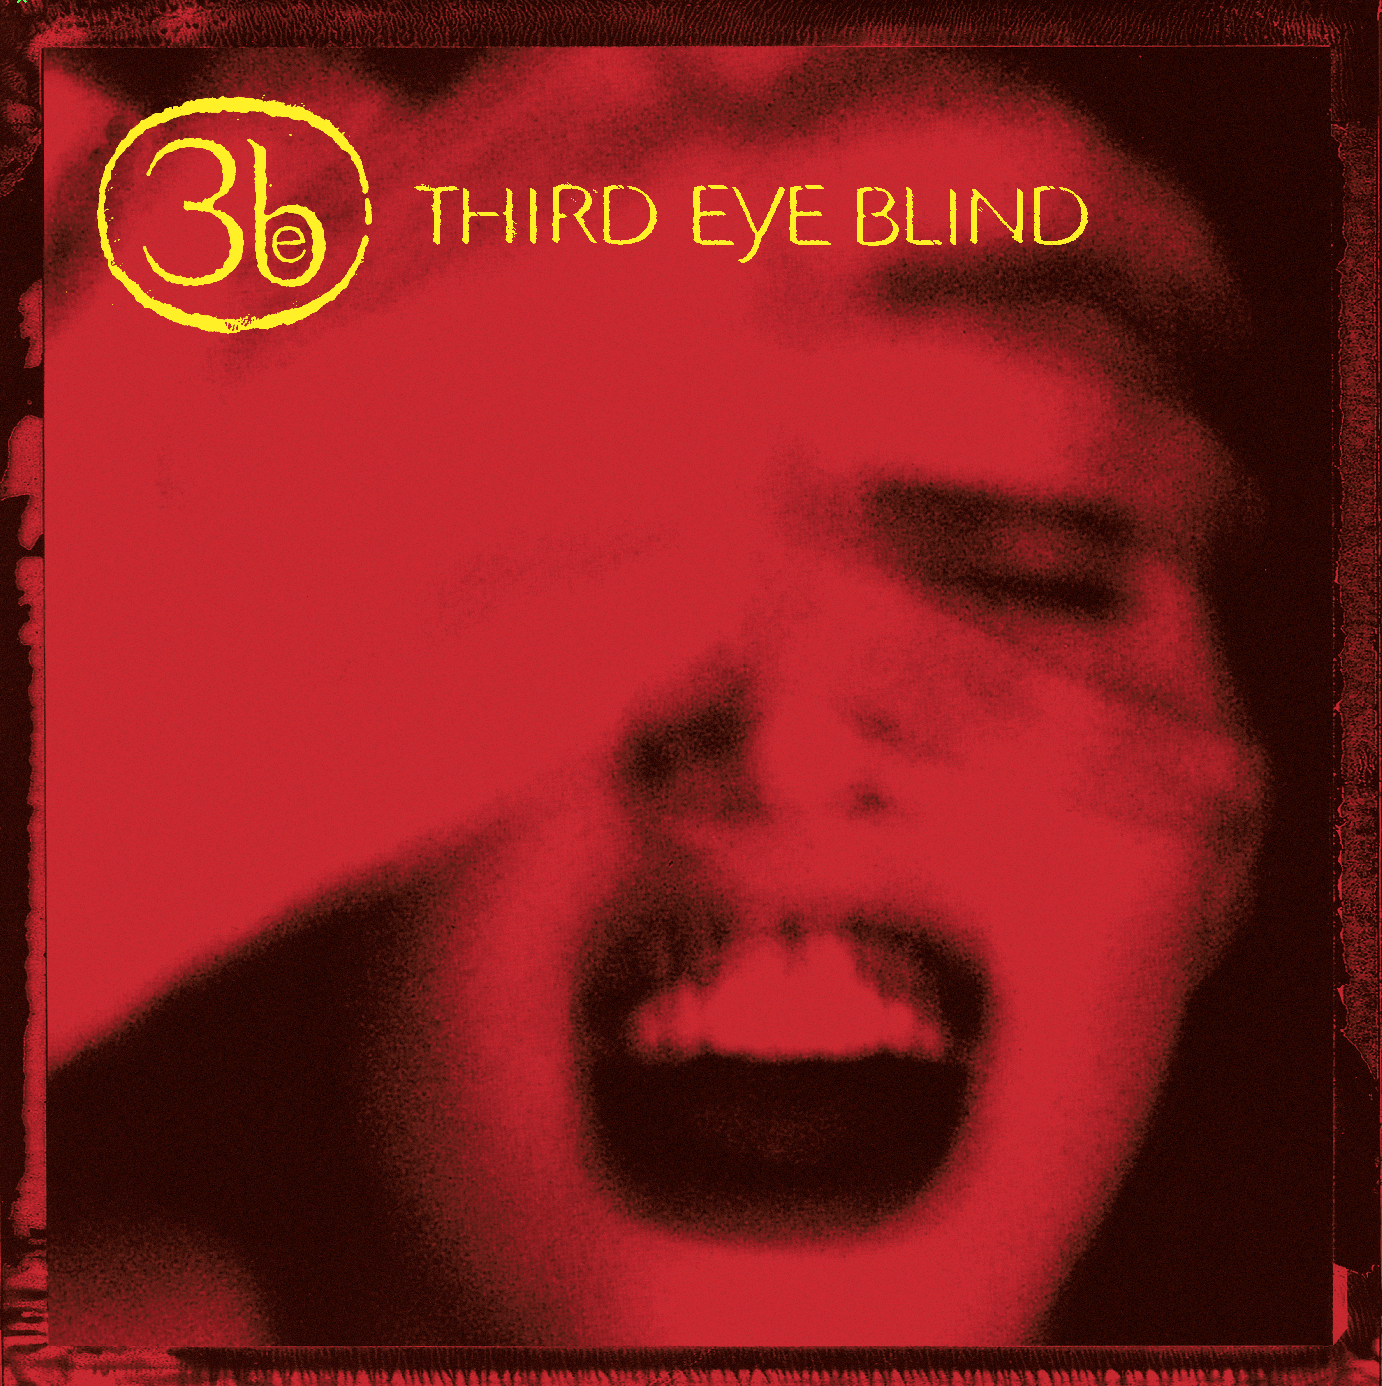 Third Eye Blind - Self-Titled - Vinyl